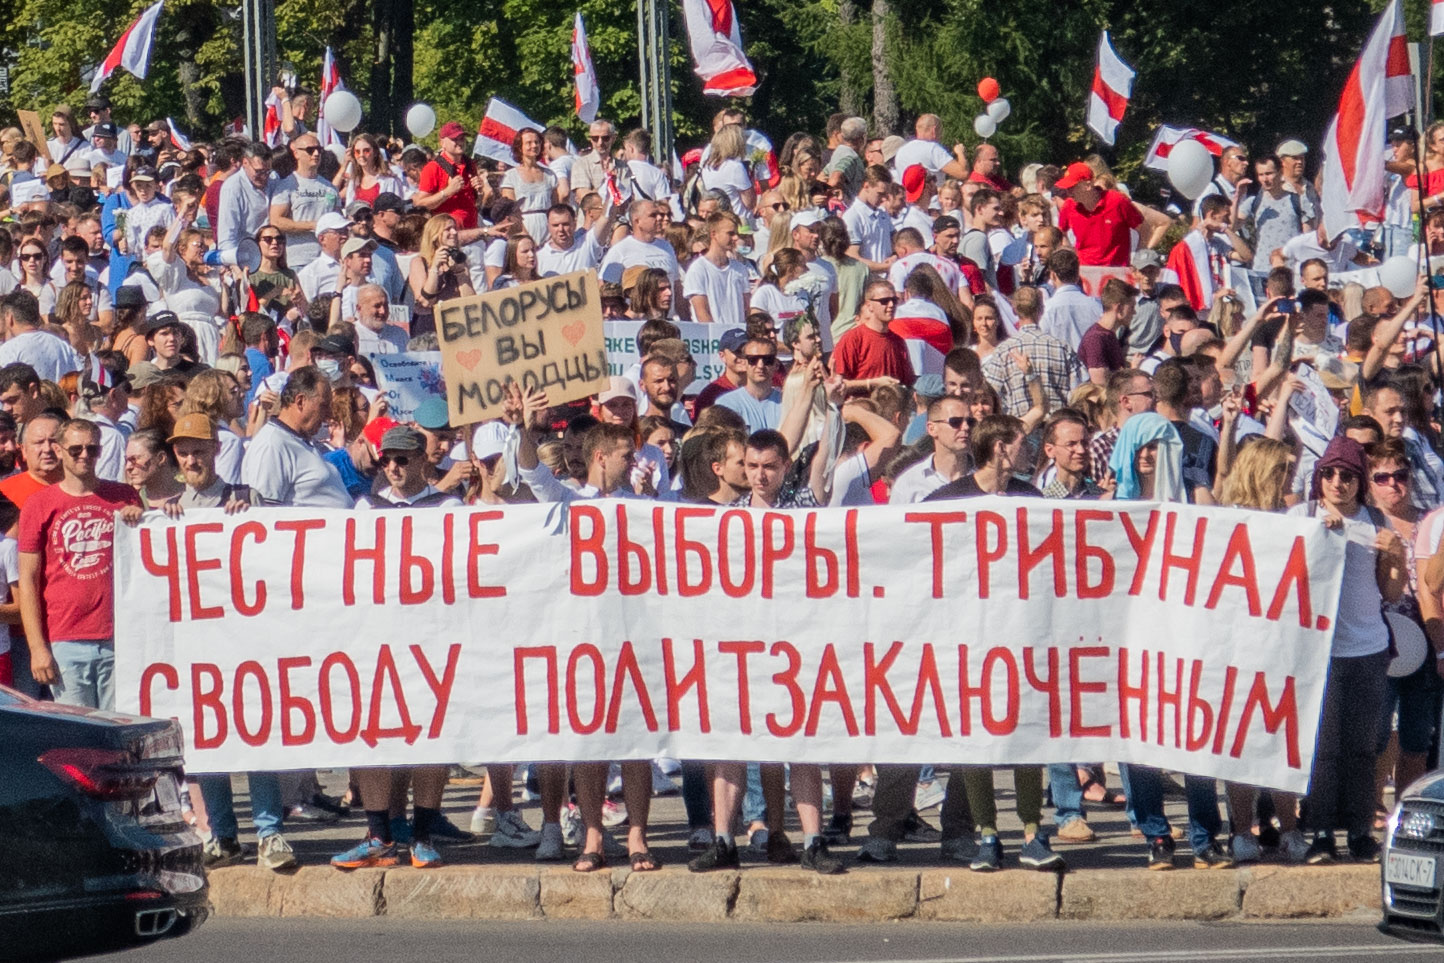 2020 Protests in Belarus